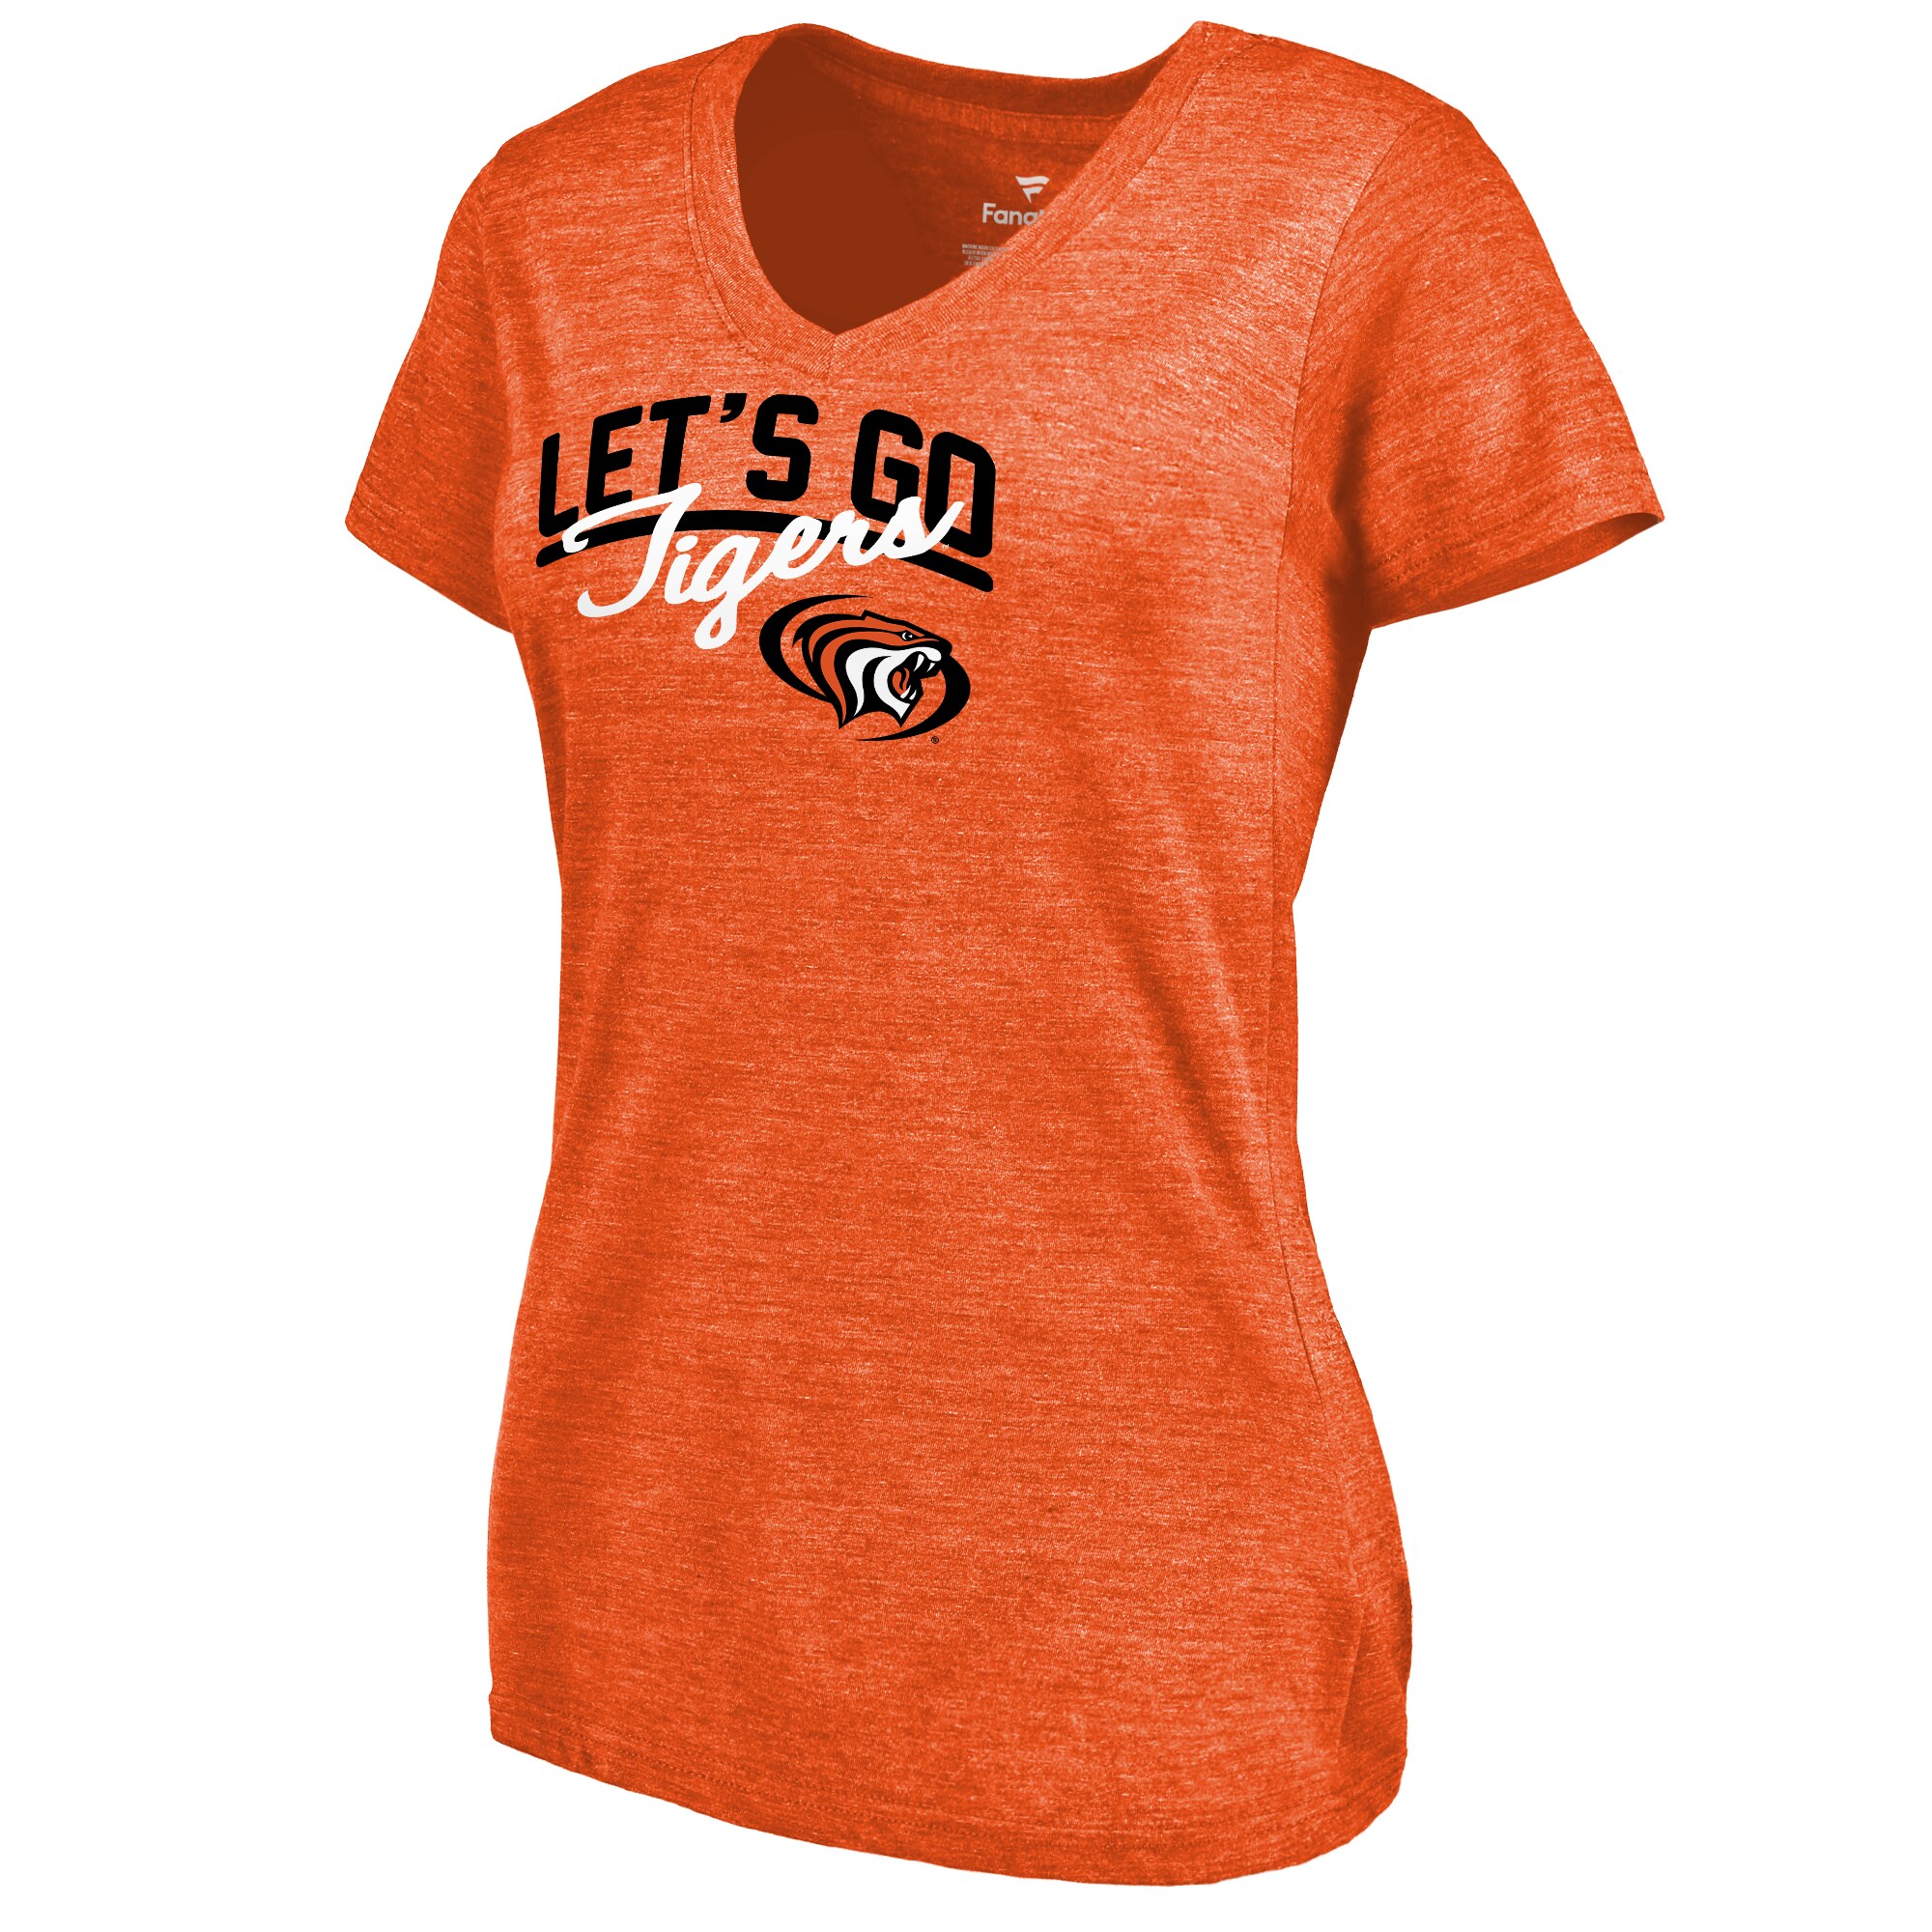 Women's Fanatics Branded Heathered Orange Pacific Tigers Let's Go Tri-Blend V-Neck T-Shirt